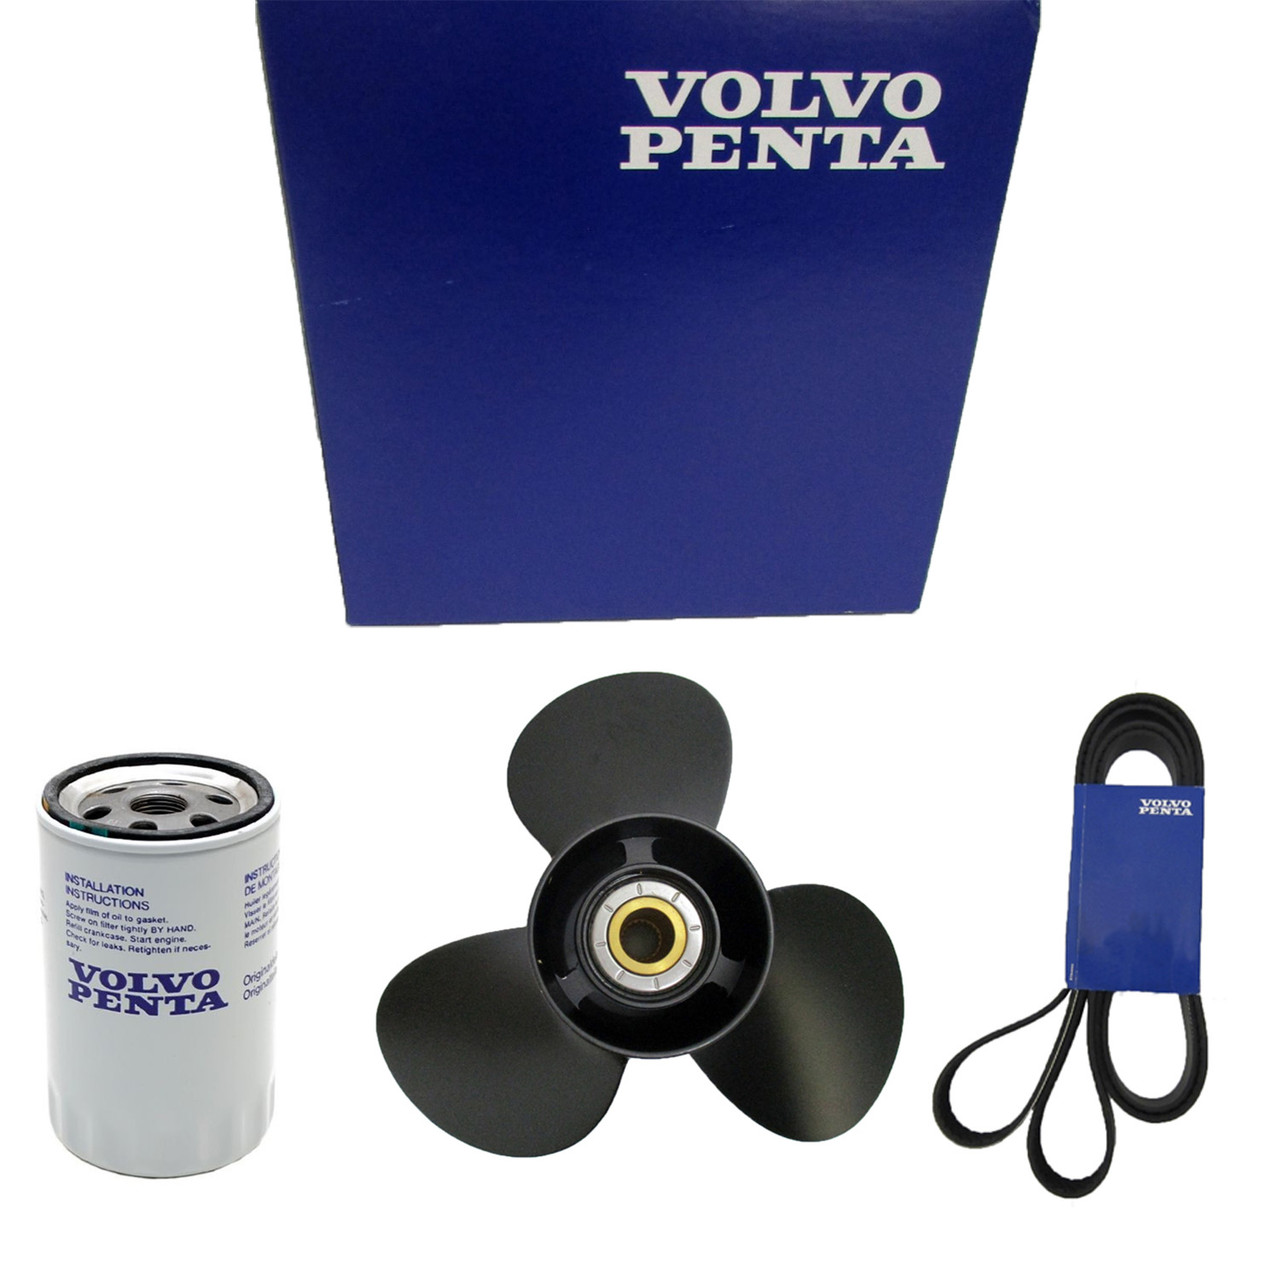 Volvo Penta New OEM Seawater Filter, 24004312